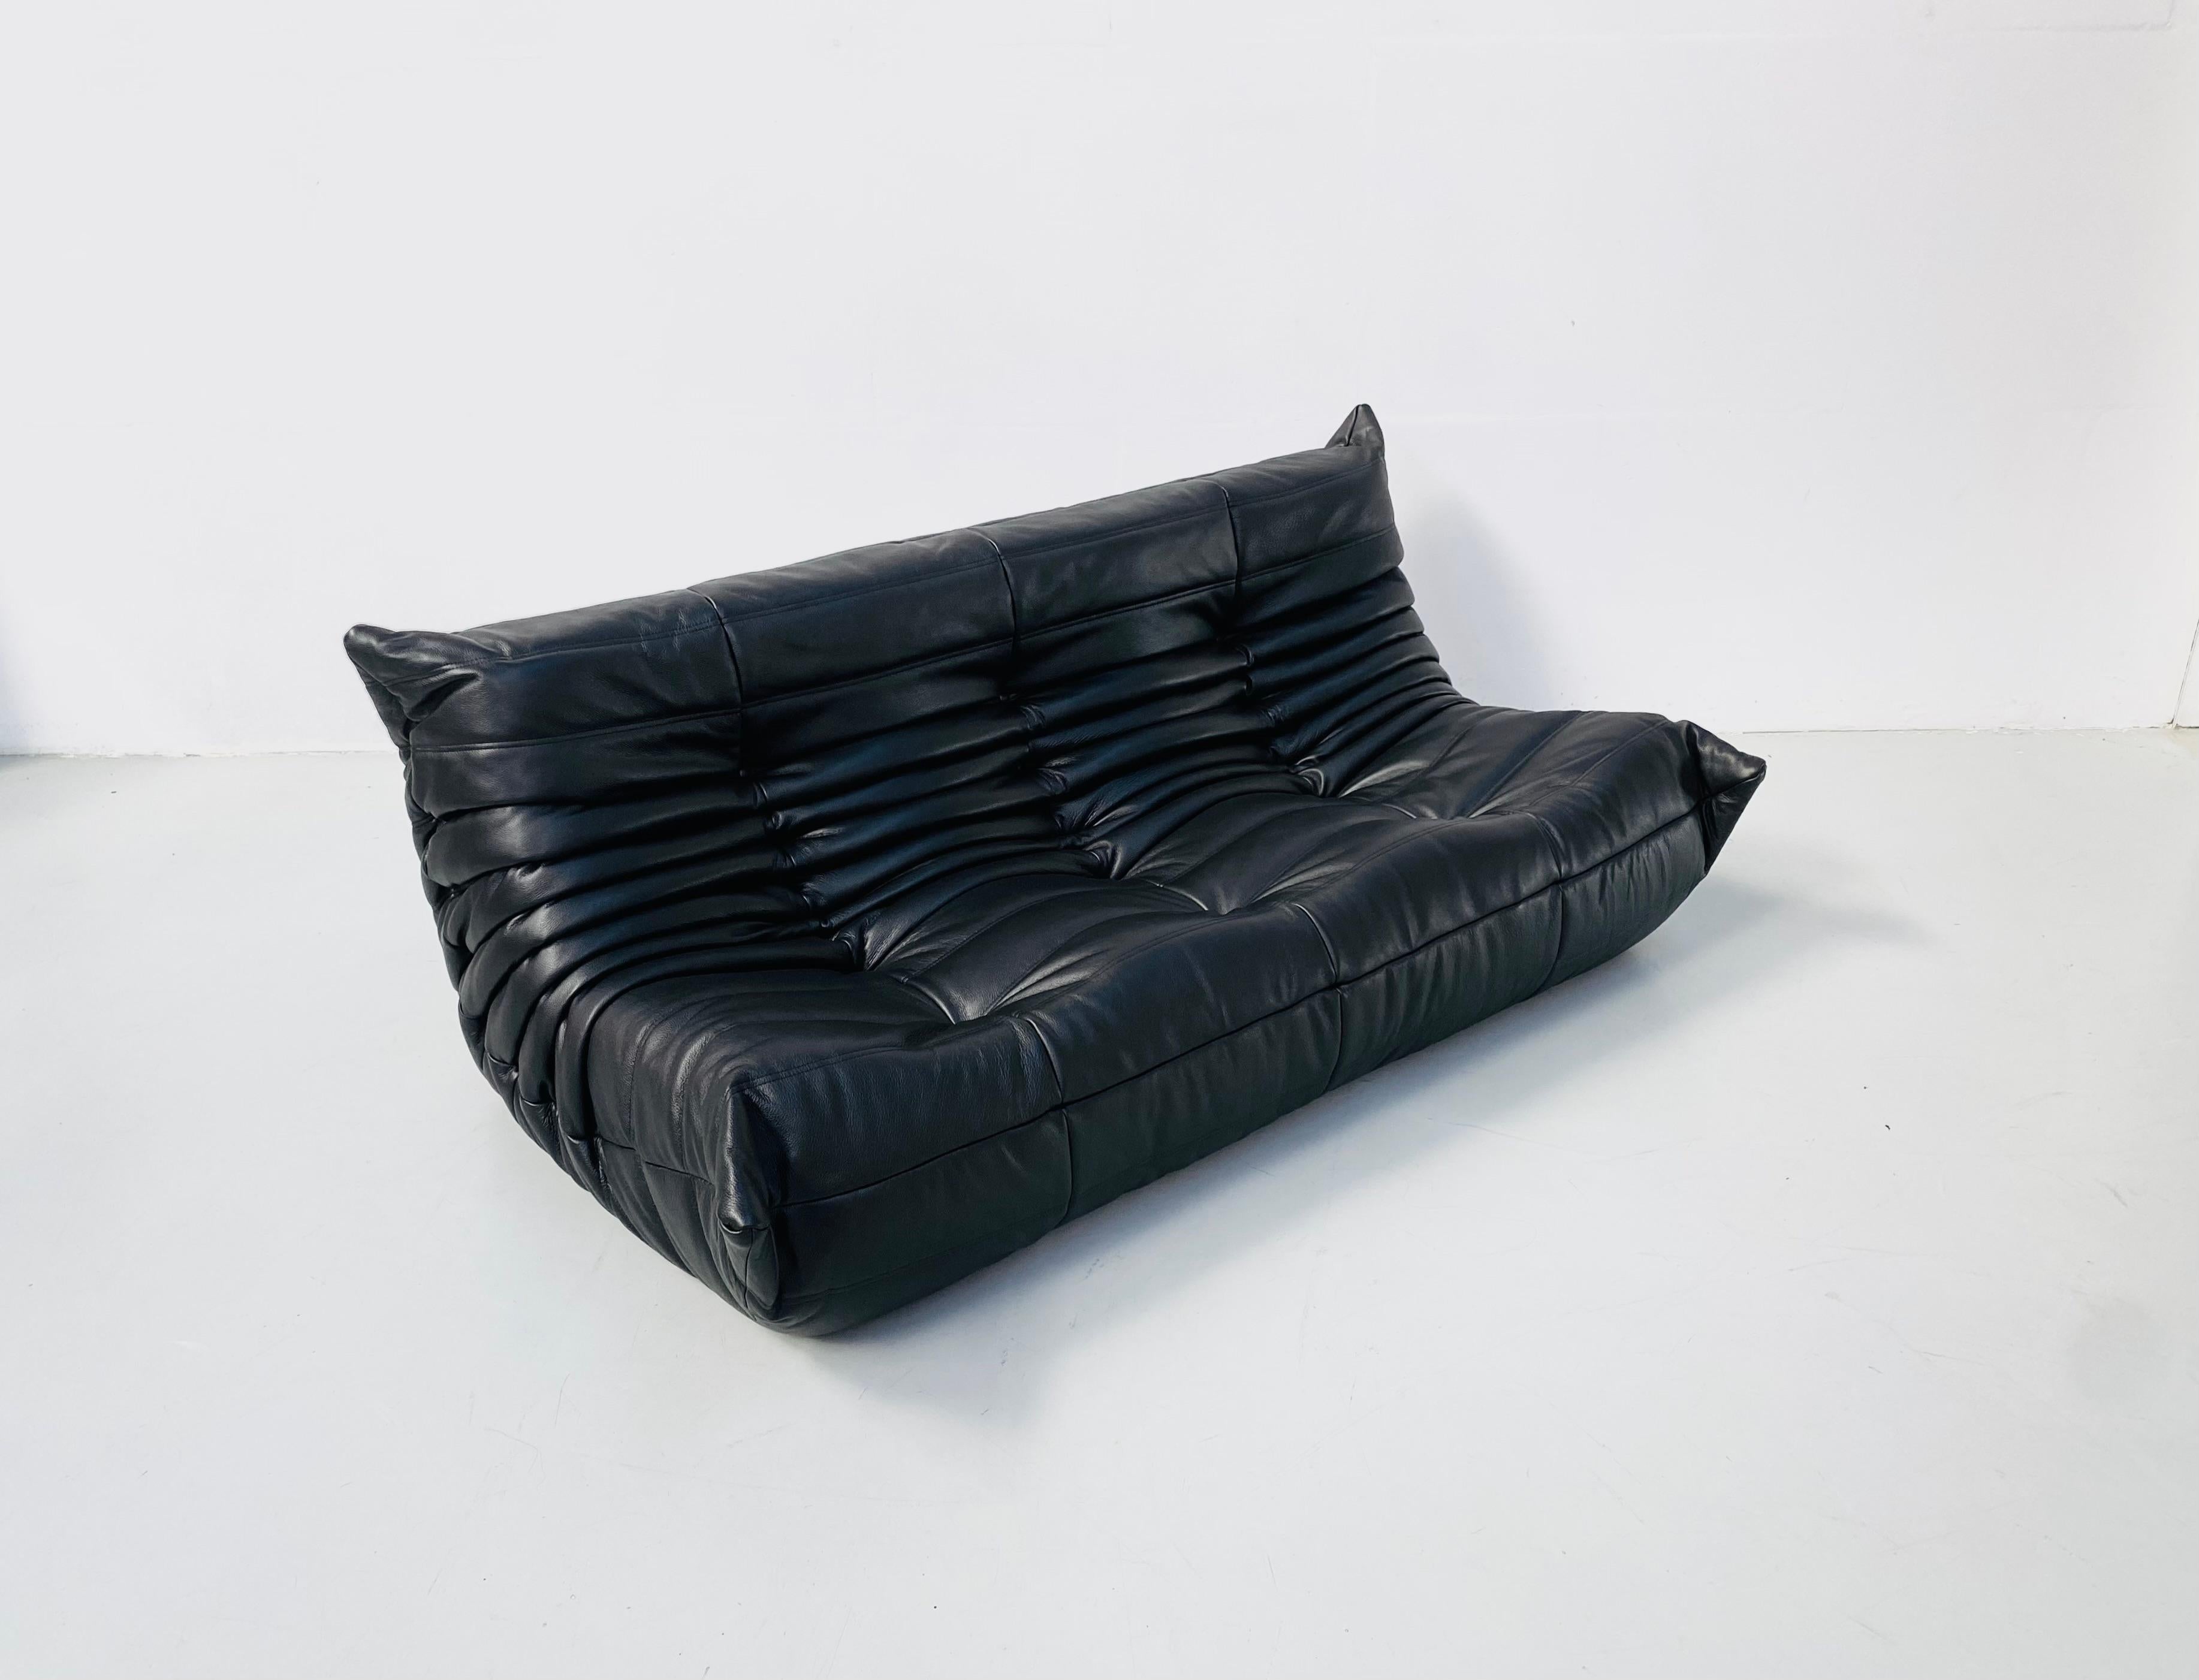 French Vintage Togo Sofa in Black Leather by Michel Ducaroy for Ligne Roset 1